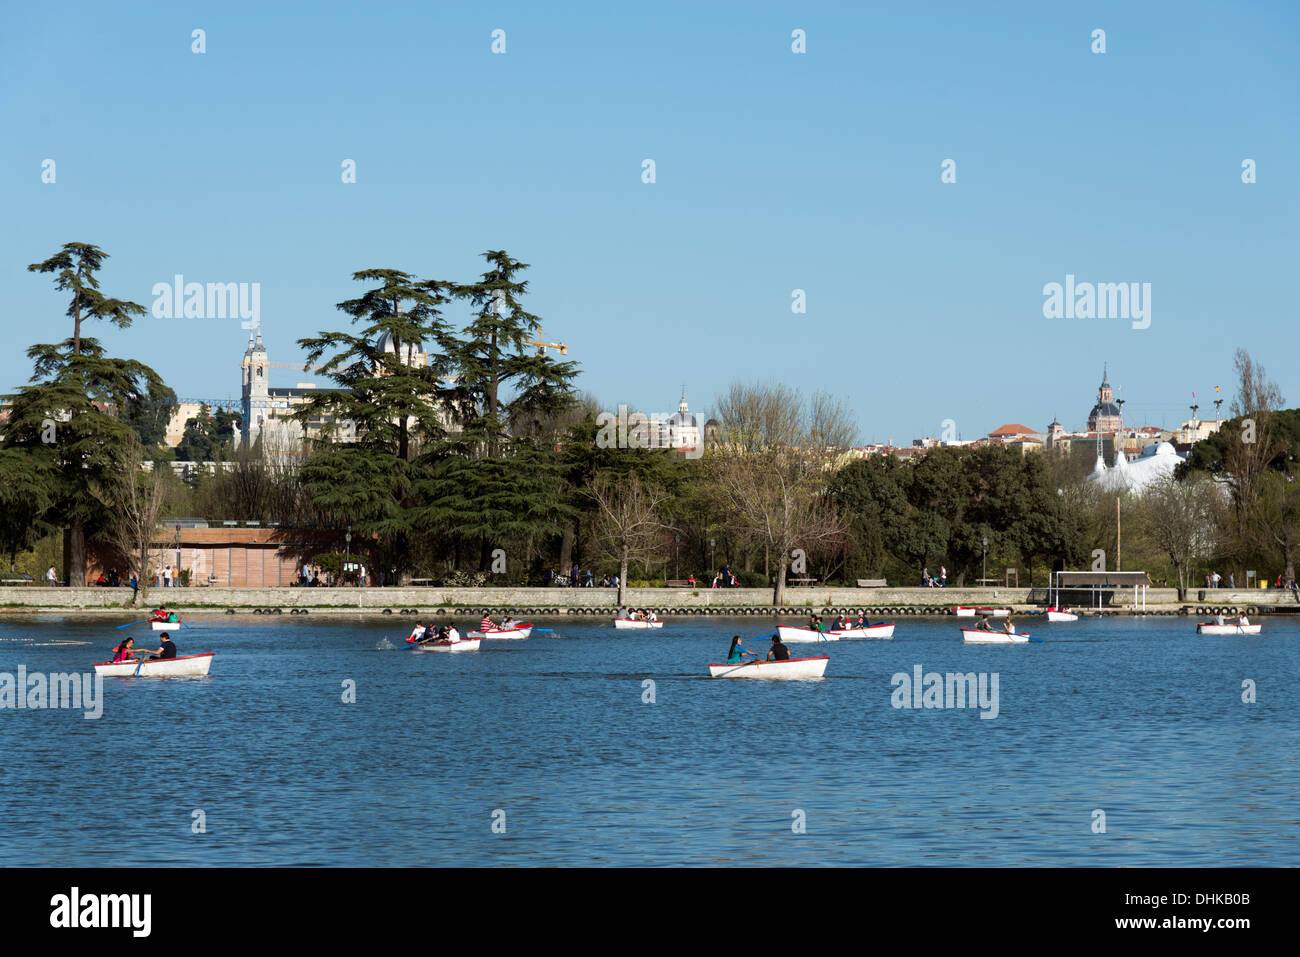 The boating lake in Casa de Campo, Madrid, Spain Stock Photo